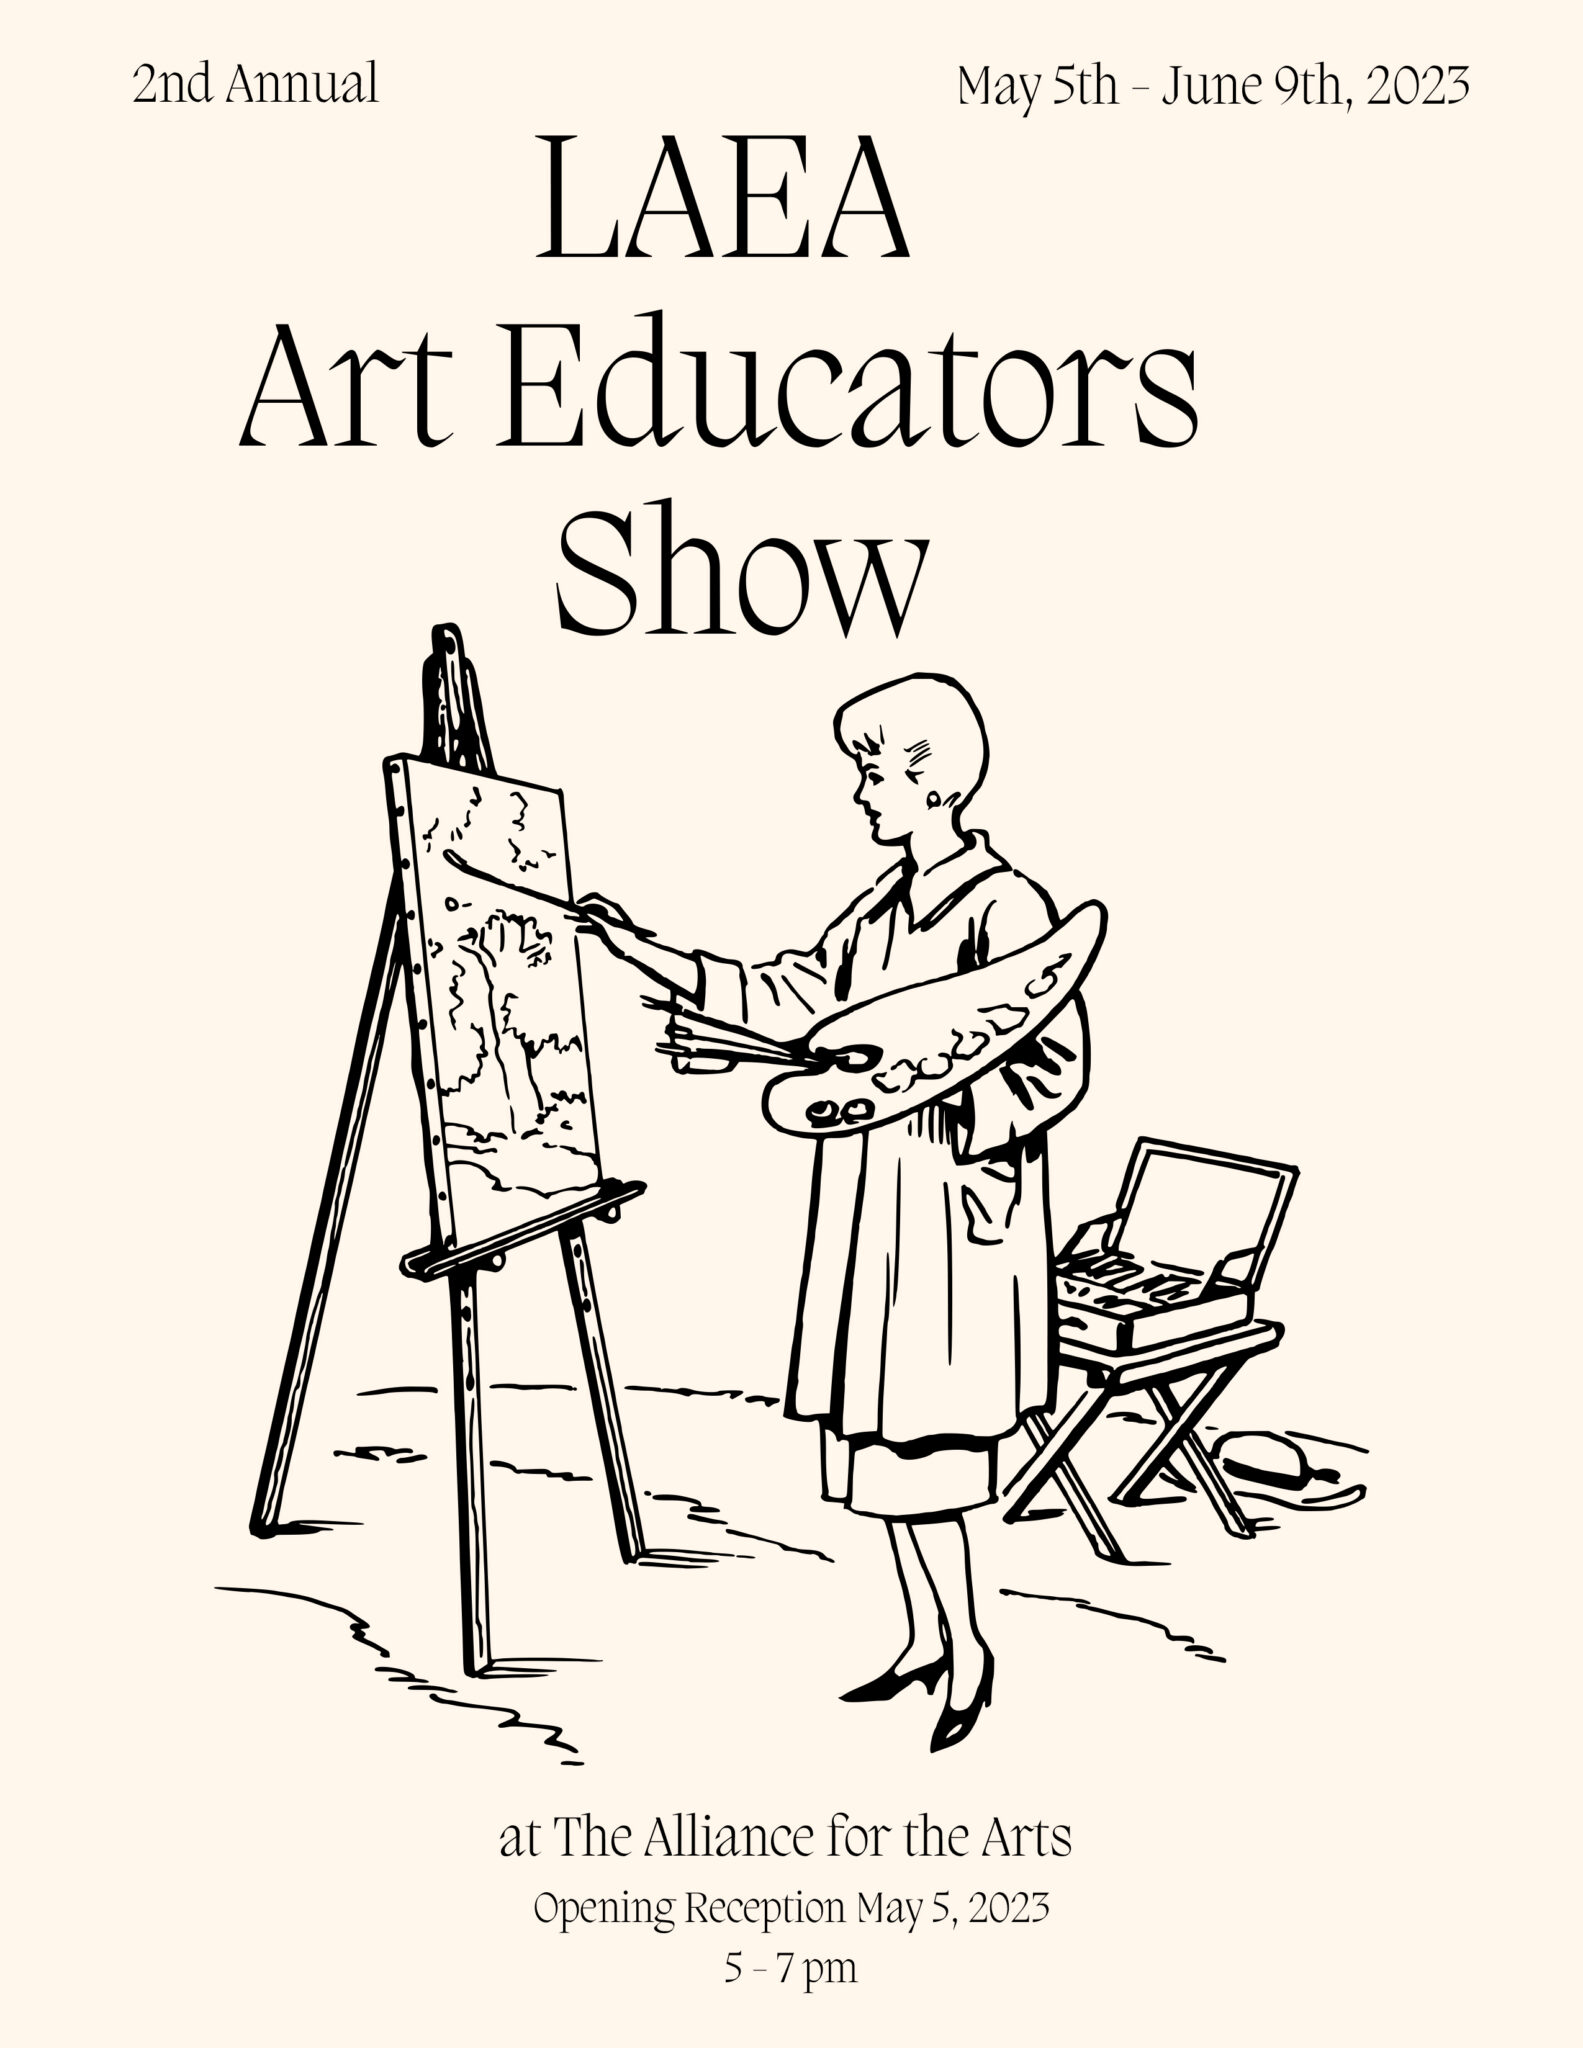 2nd Annual LAEA Art Educators Show